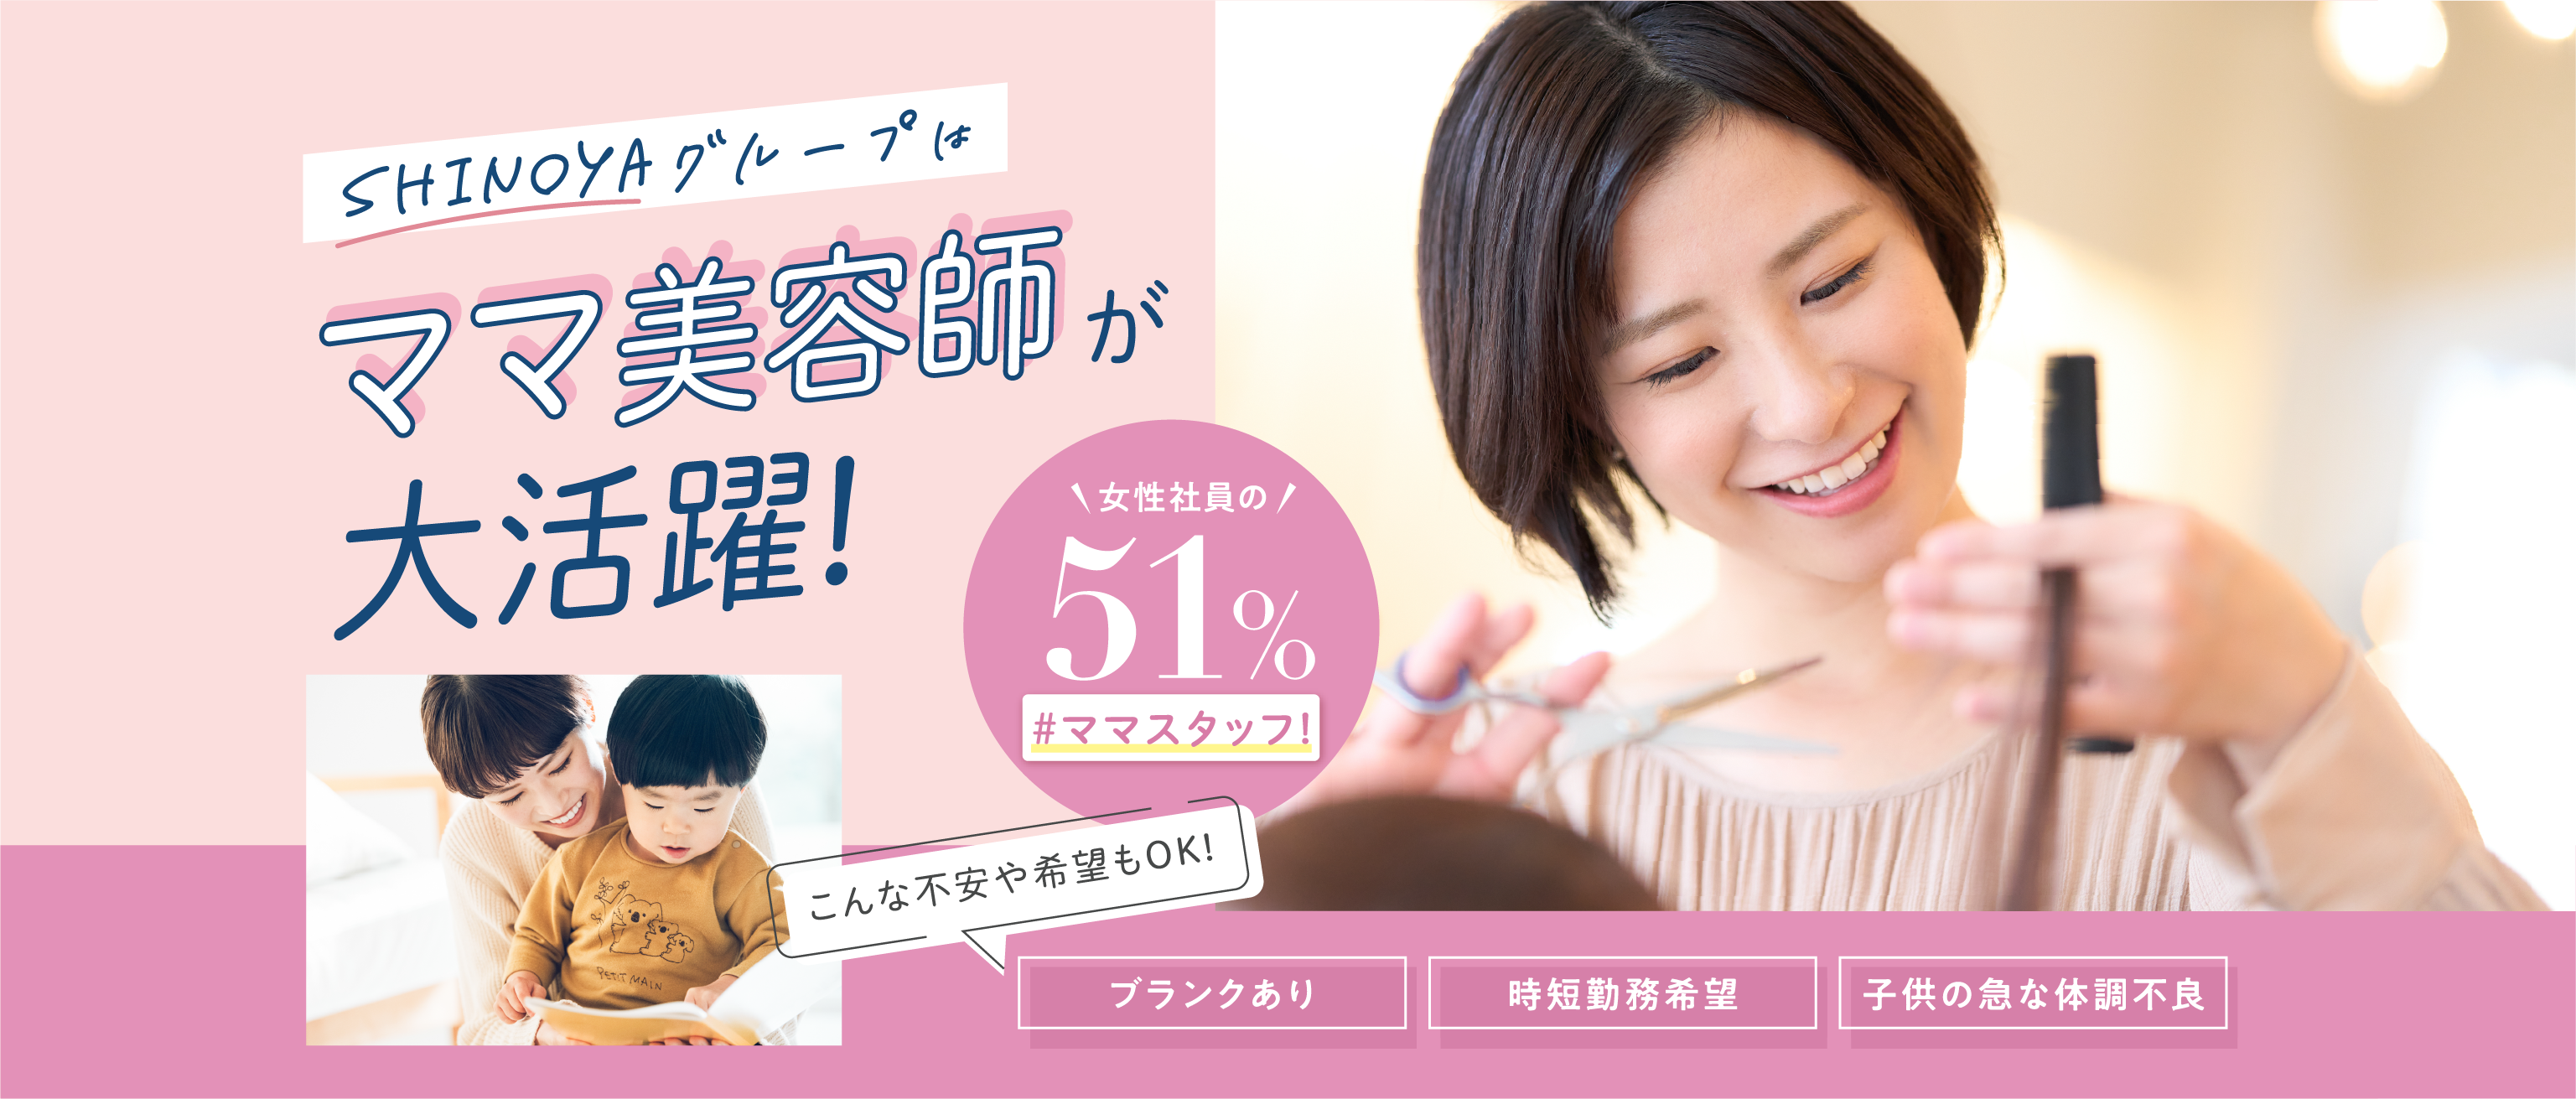 Shinoyaグループはママ美容師が大活躍！女性社員の51%ママスタッフ! こんな不安や希望もOK!「ブランクあり」「時短勤務希望」「子供の急な体調不良」